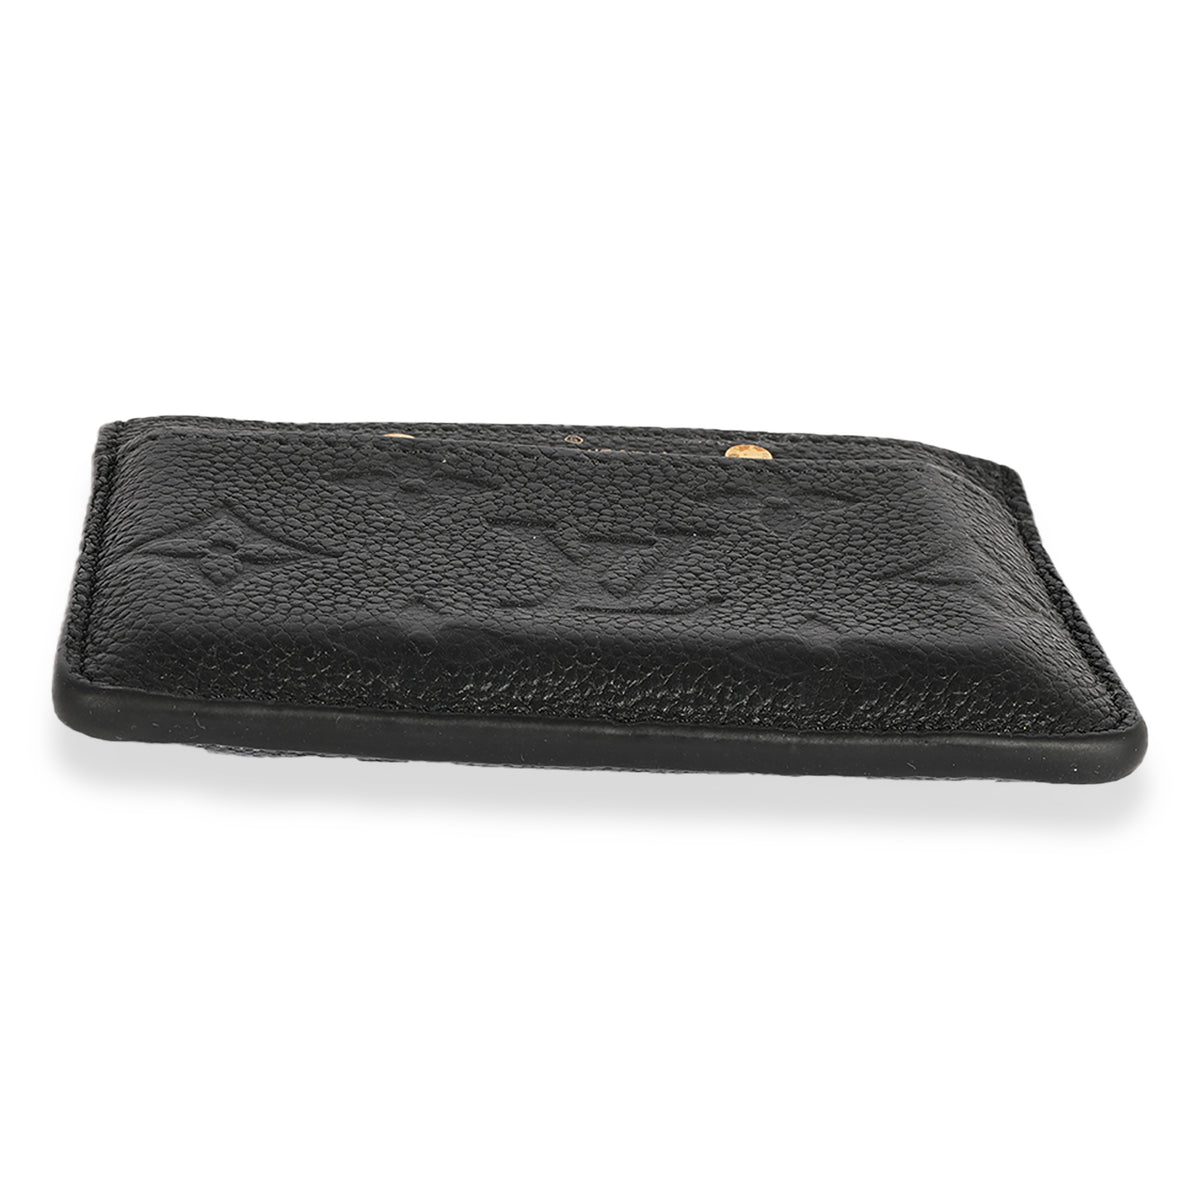 Louis Vuitton Wallet Credit Card Insert Black Empriente Leather